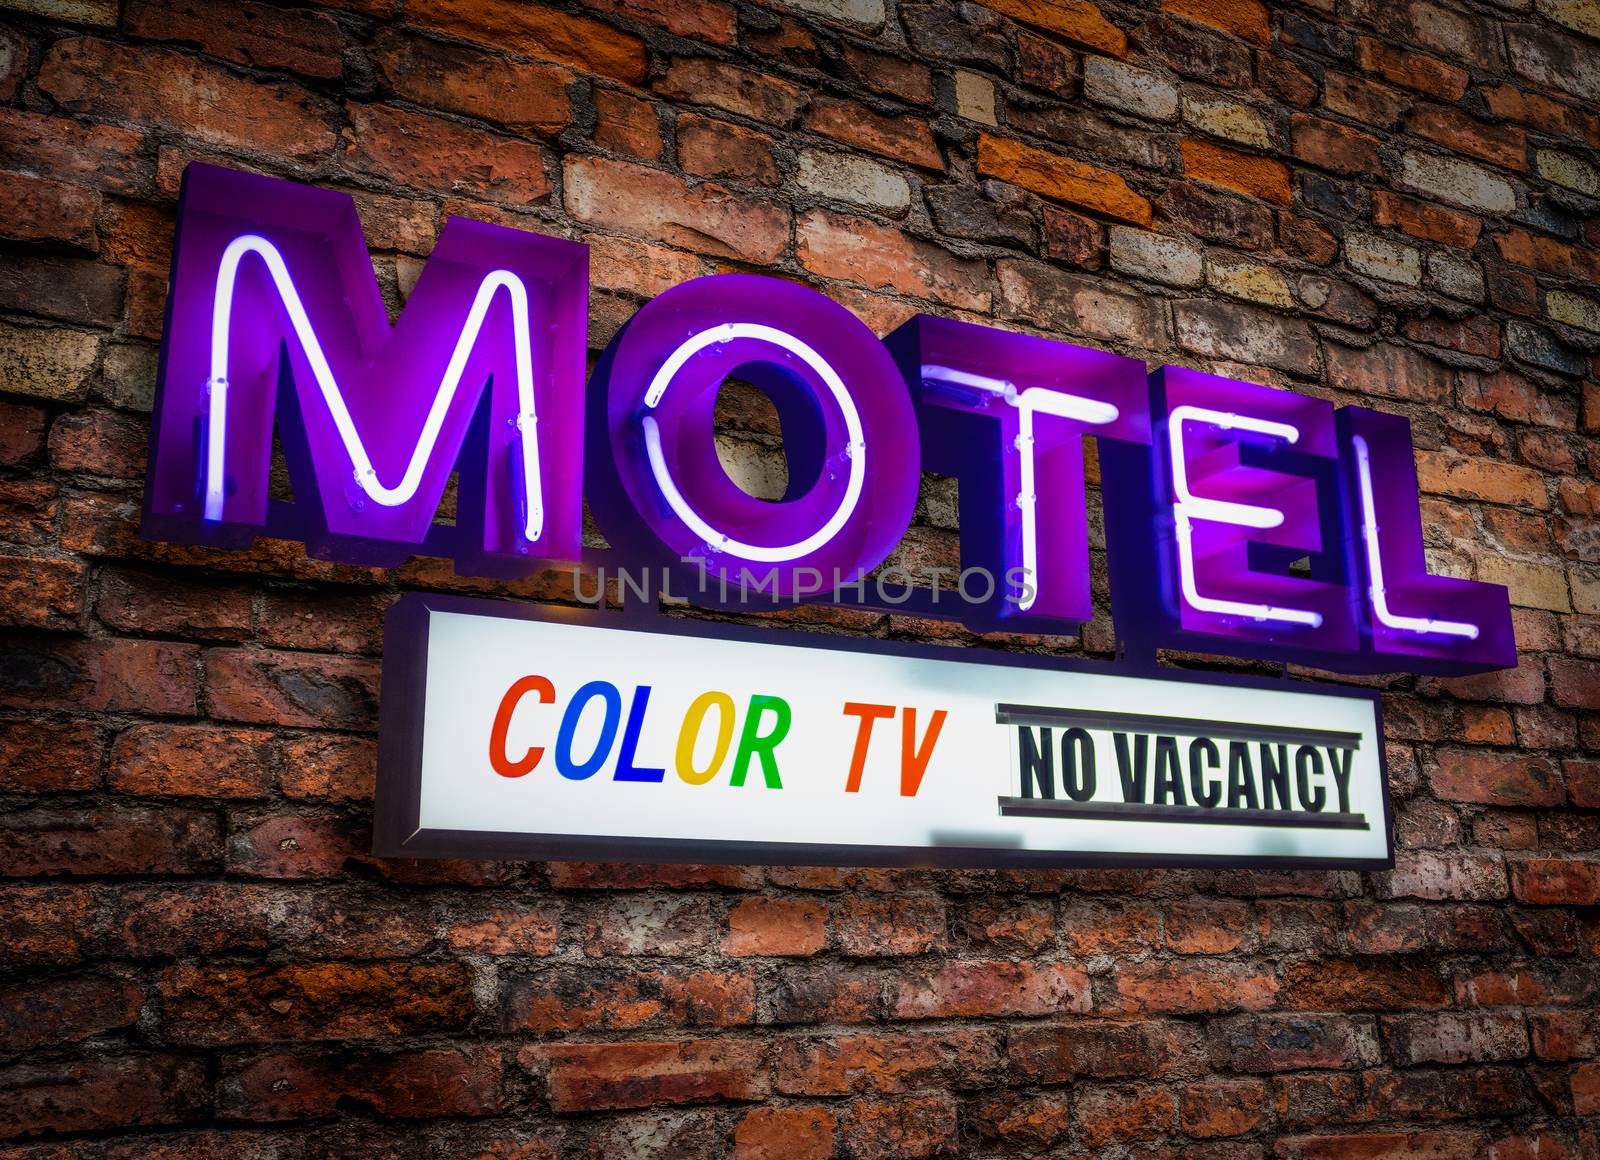 Retro Neon Motel Sign In California Advertising A Color TV